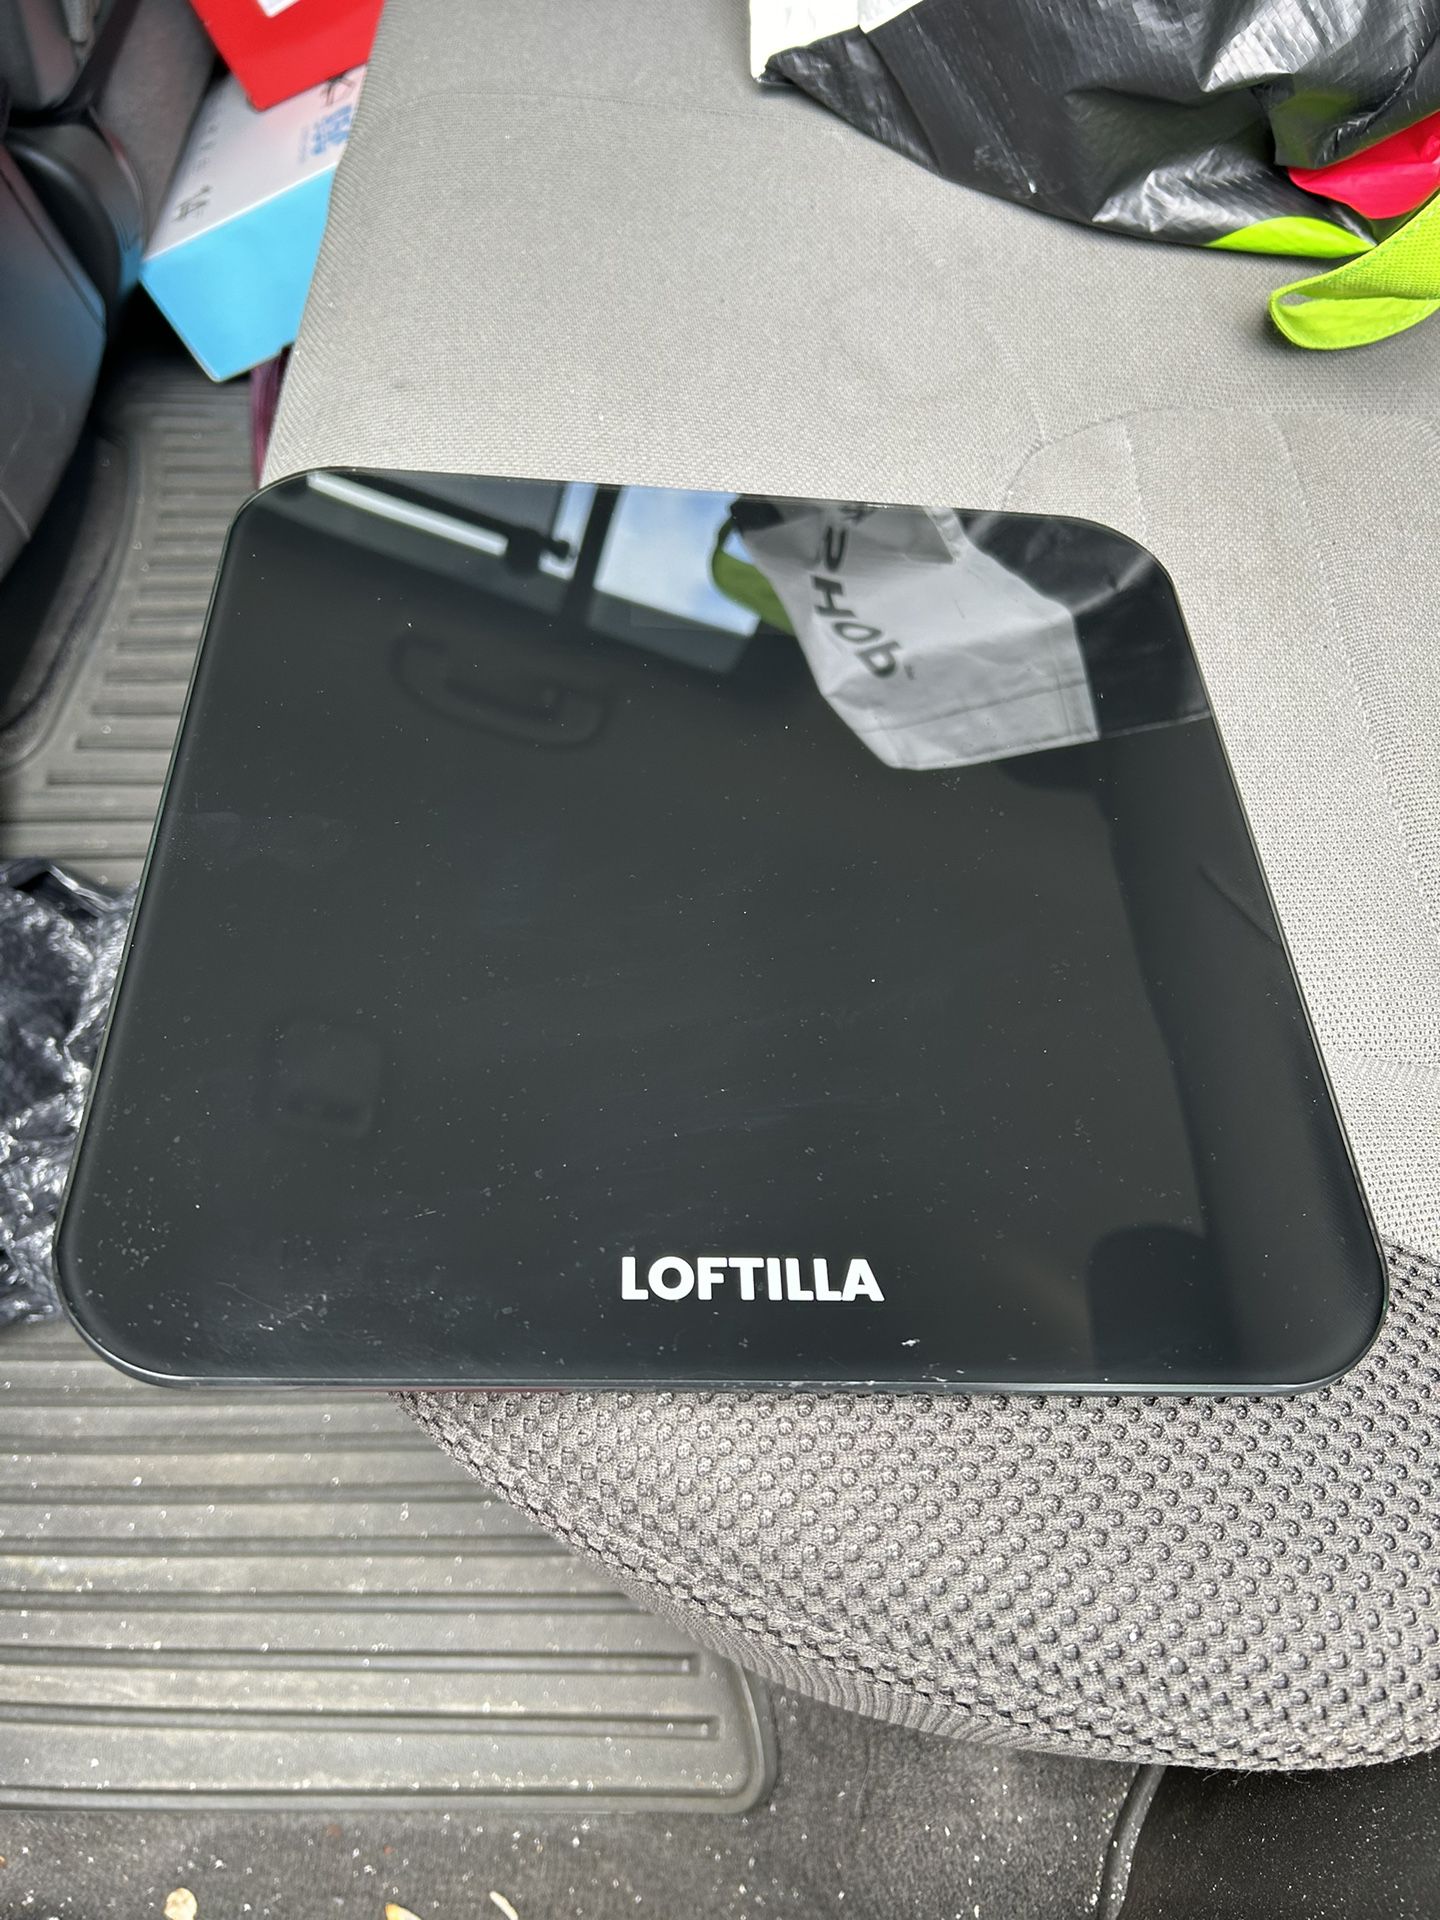 loftilla smart weight scale